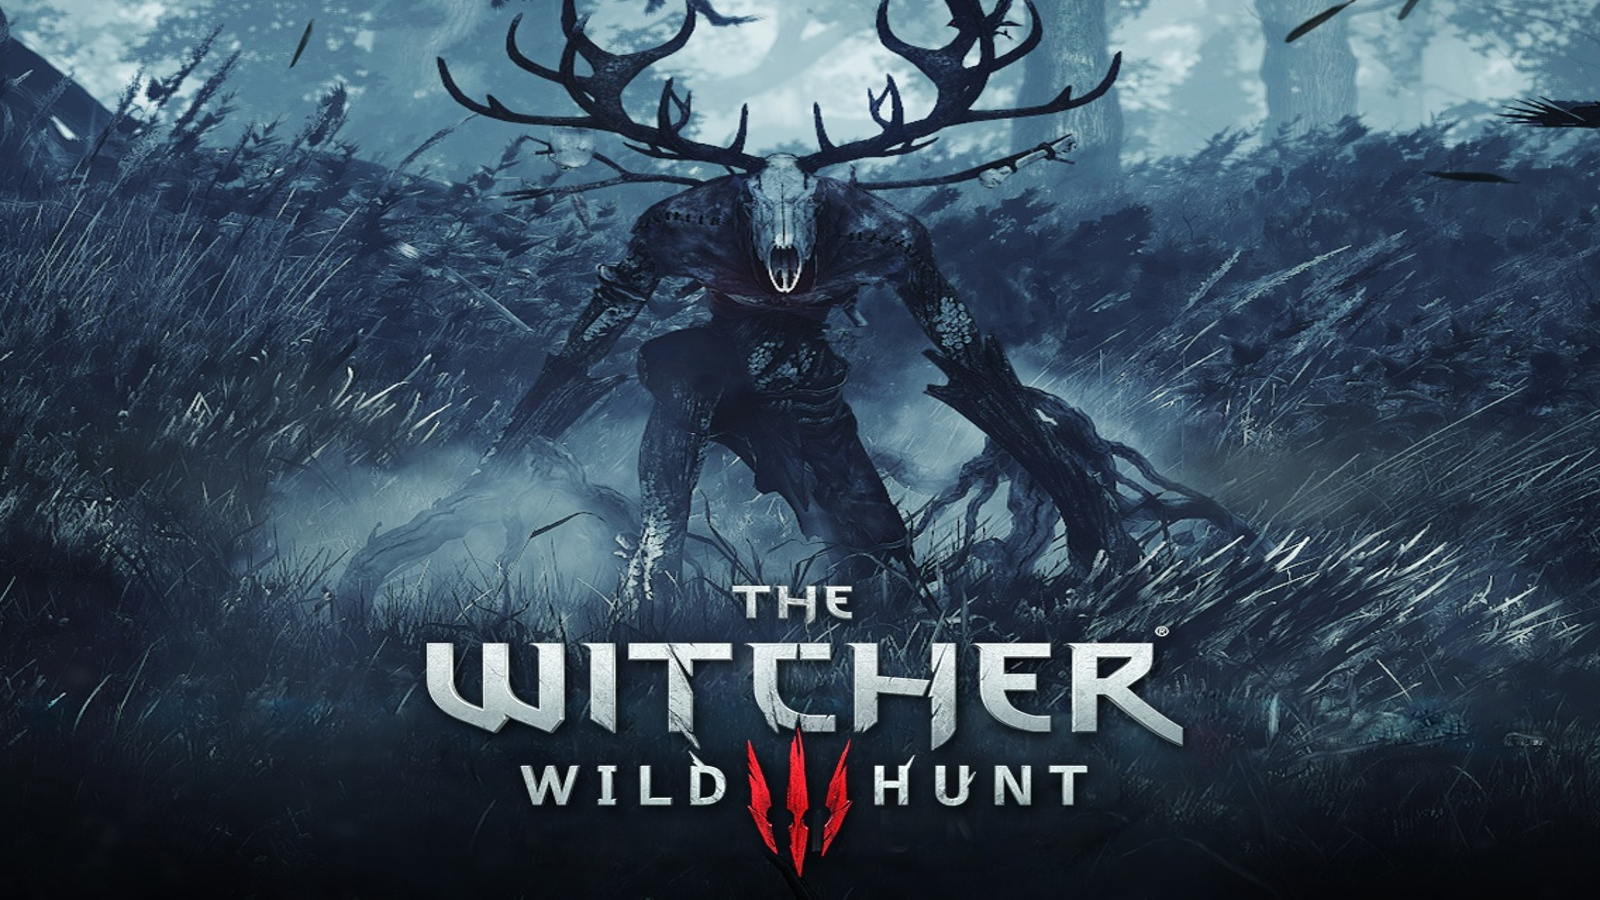 CD PROJEKT RED FANS: Detonado The Witcher 2: Assassins of Kings